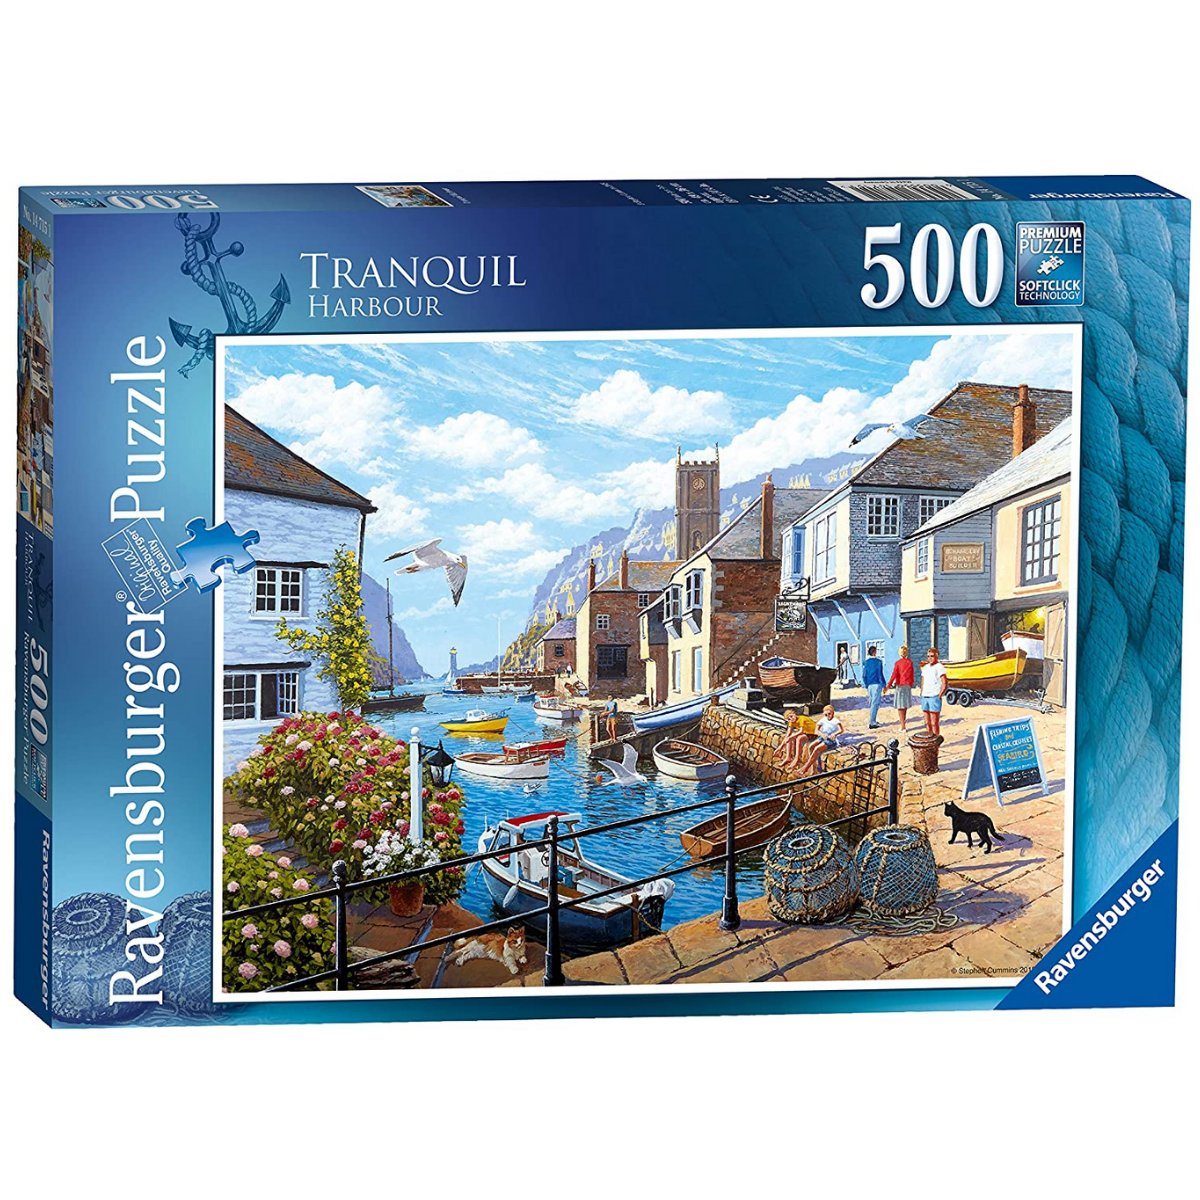 Ravensburger Tranquil Harbour Jigsaw Puzzle (500 Pieces) - Phillips Hobbies